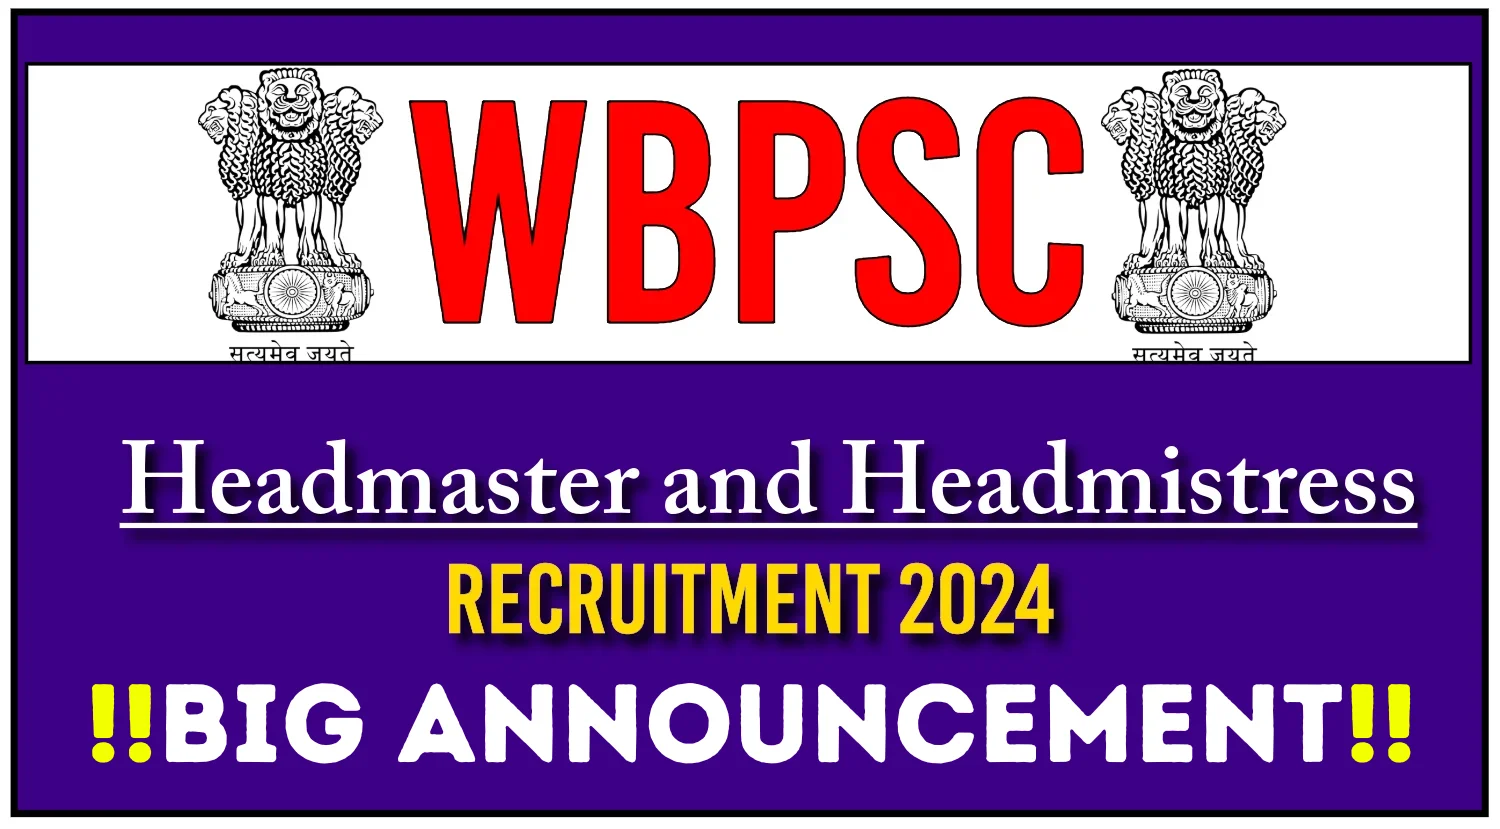 WBPSC Made a Big Announcement Regarding Headmaster and Headmistress Recruitment 2024